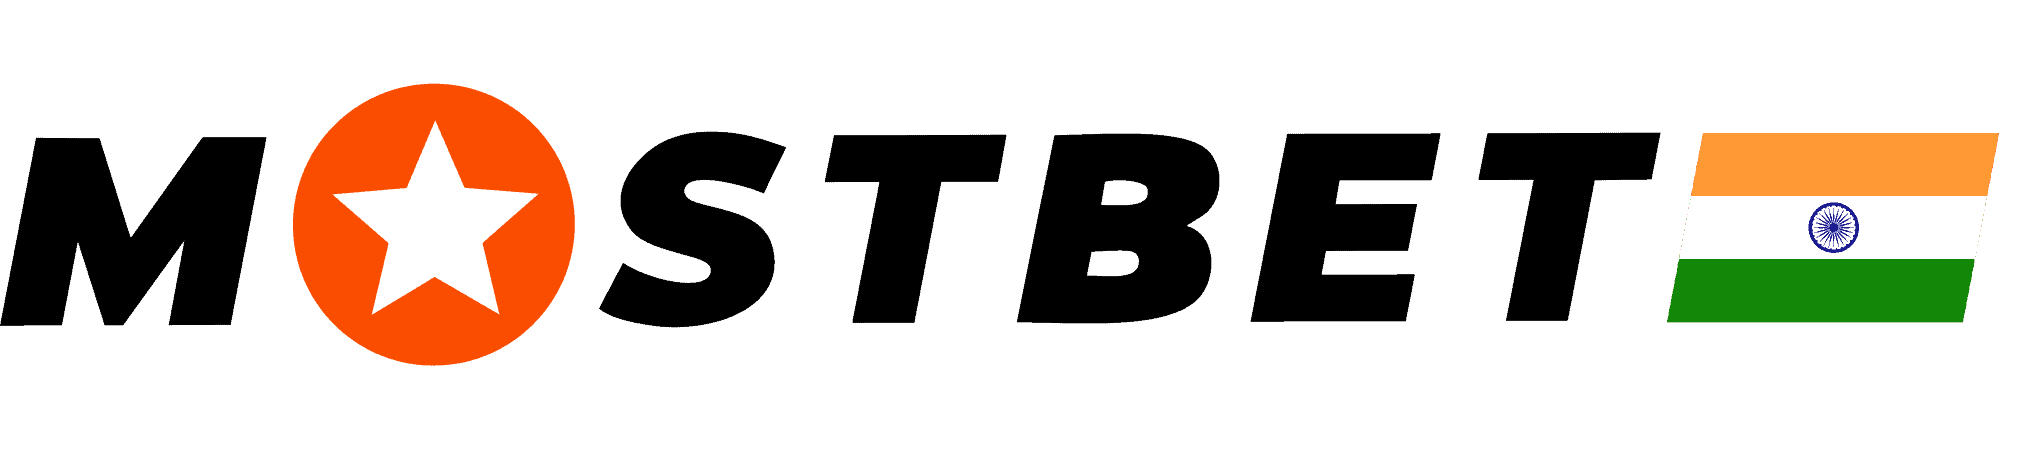 Se7en Worst Mostbet TR-40 Betting Company Review Techniques